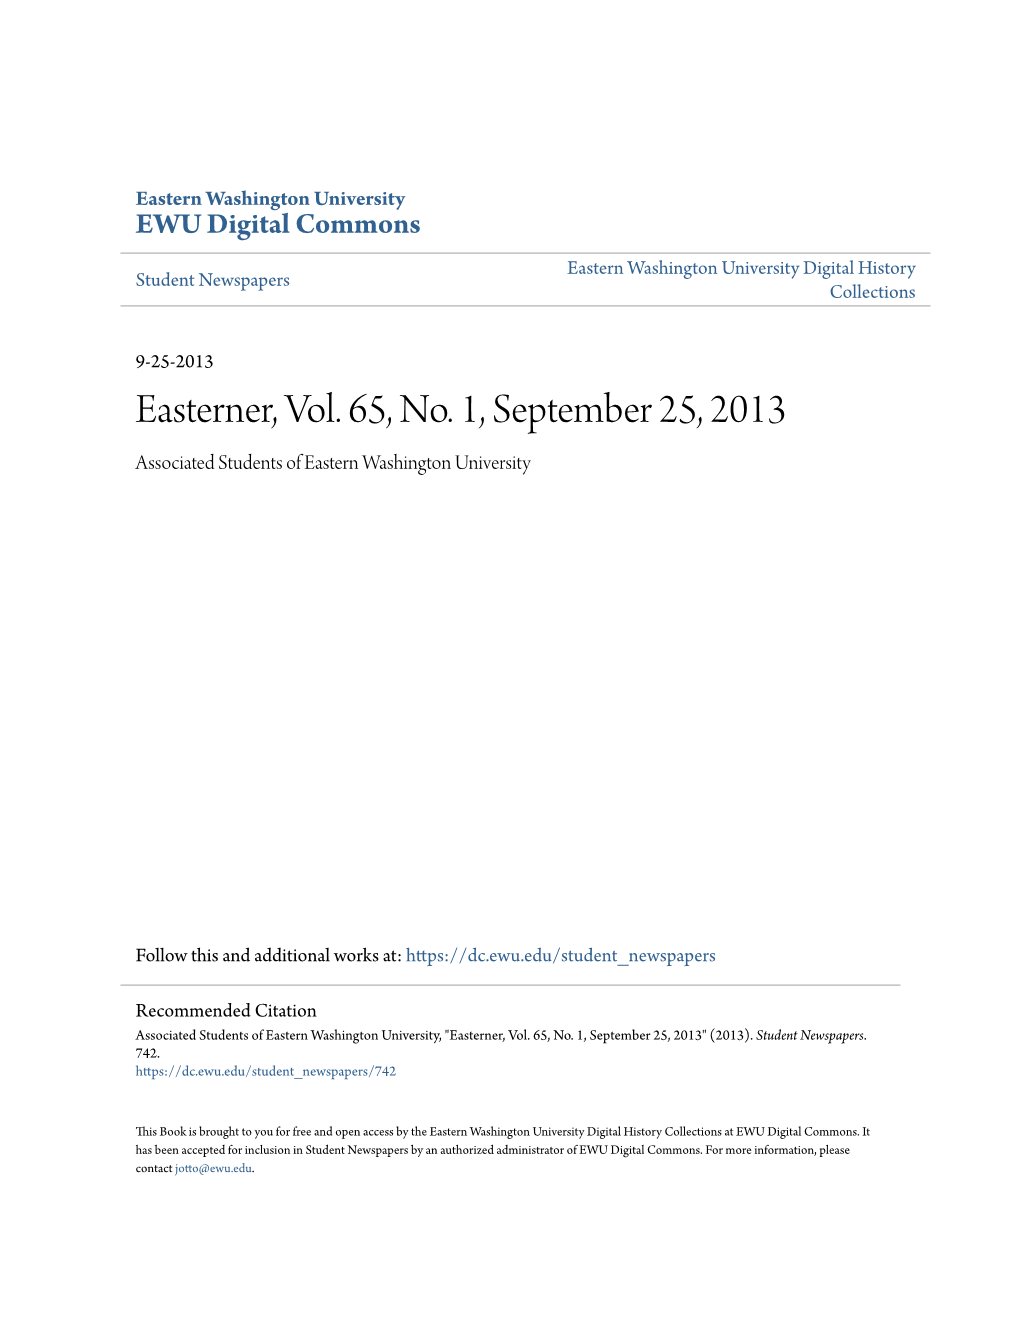 Easterner, Vol. 65, No. 1, September 25, 2013 Associated Students of Eastern Washington University